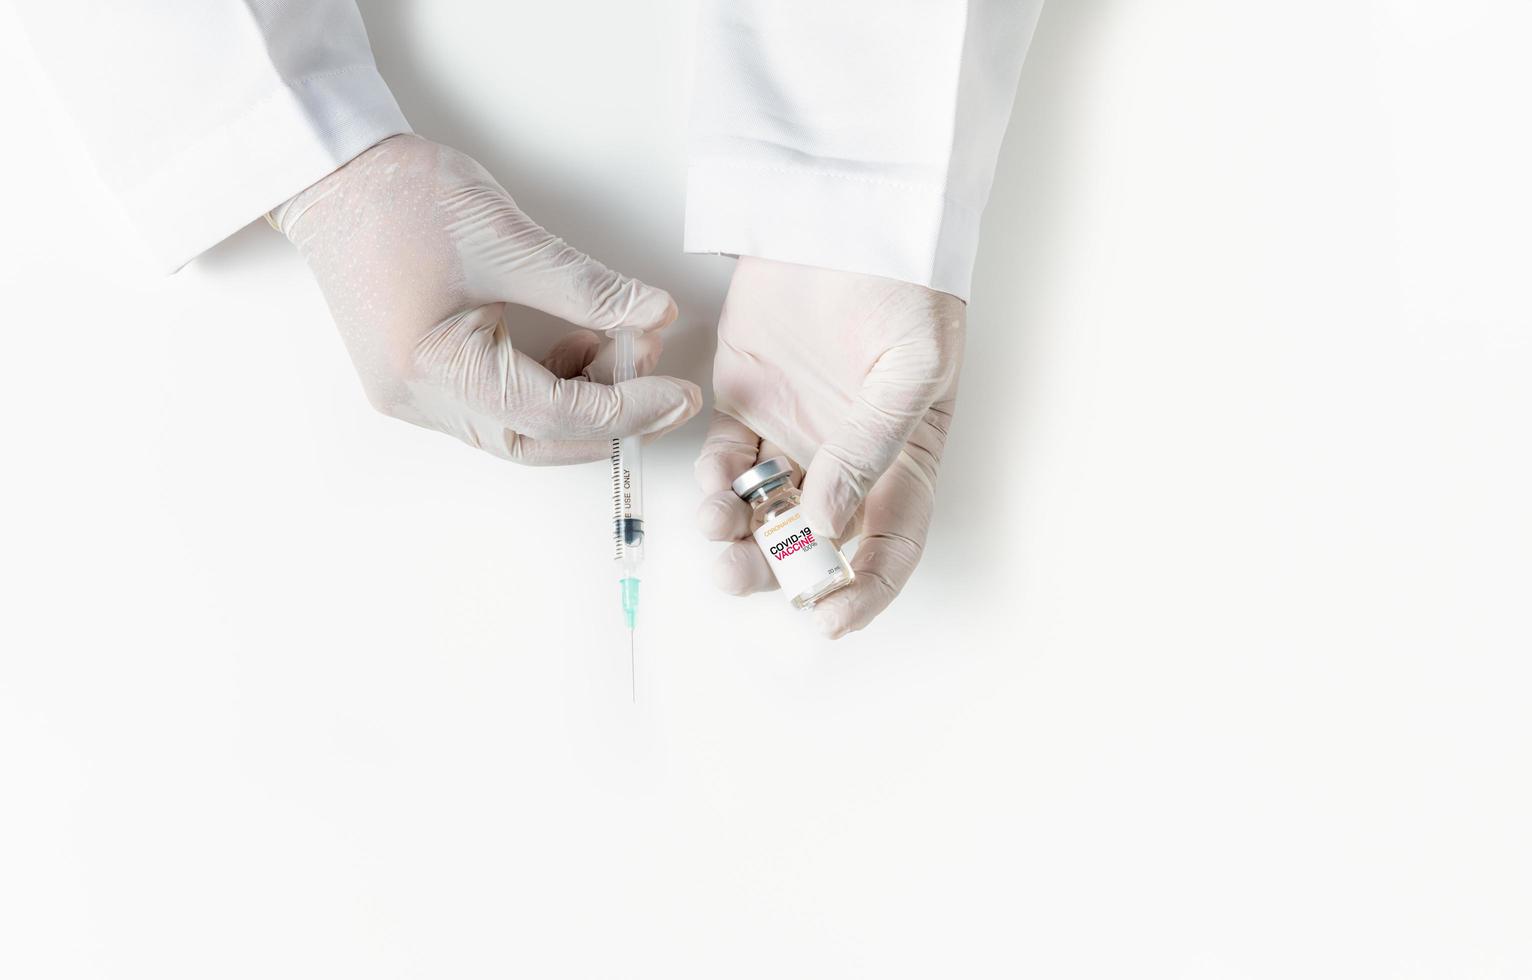 Doctor or scientist hand in white gloves holding flu, measles, coronavirus vaccine shot photo